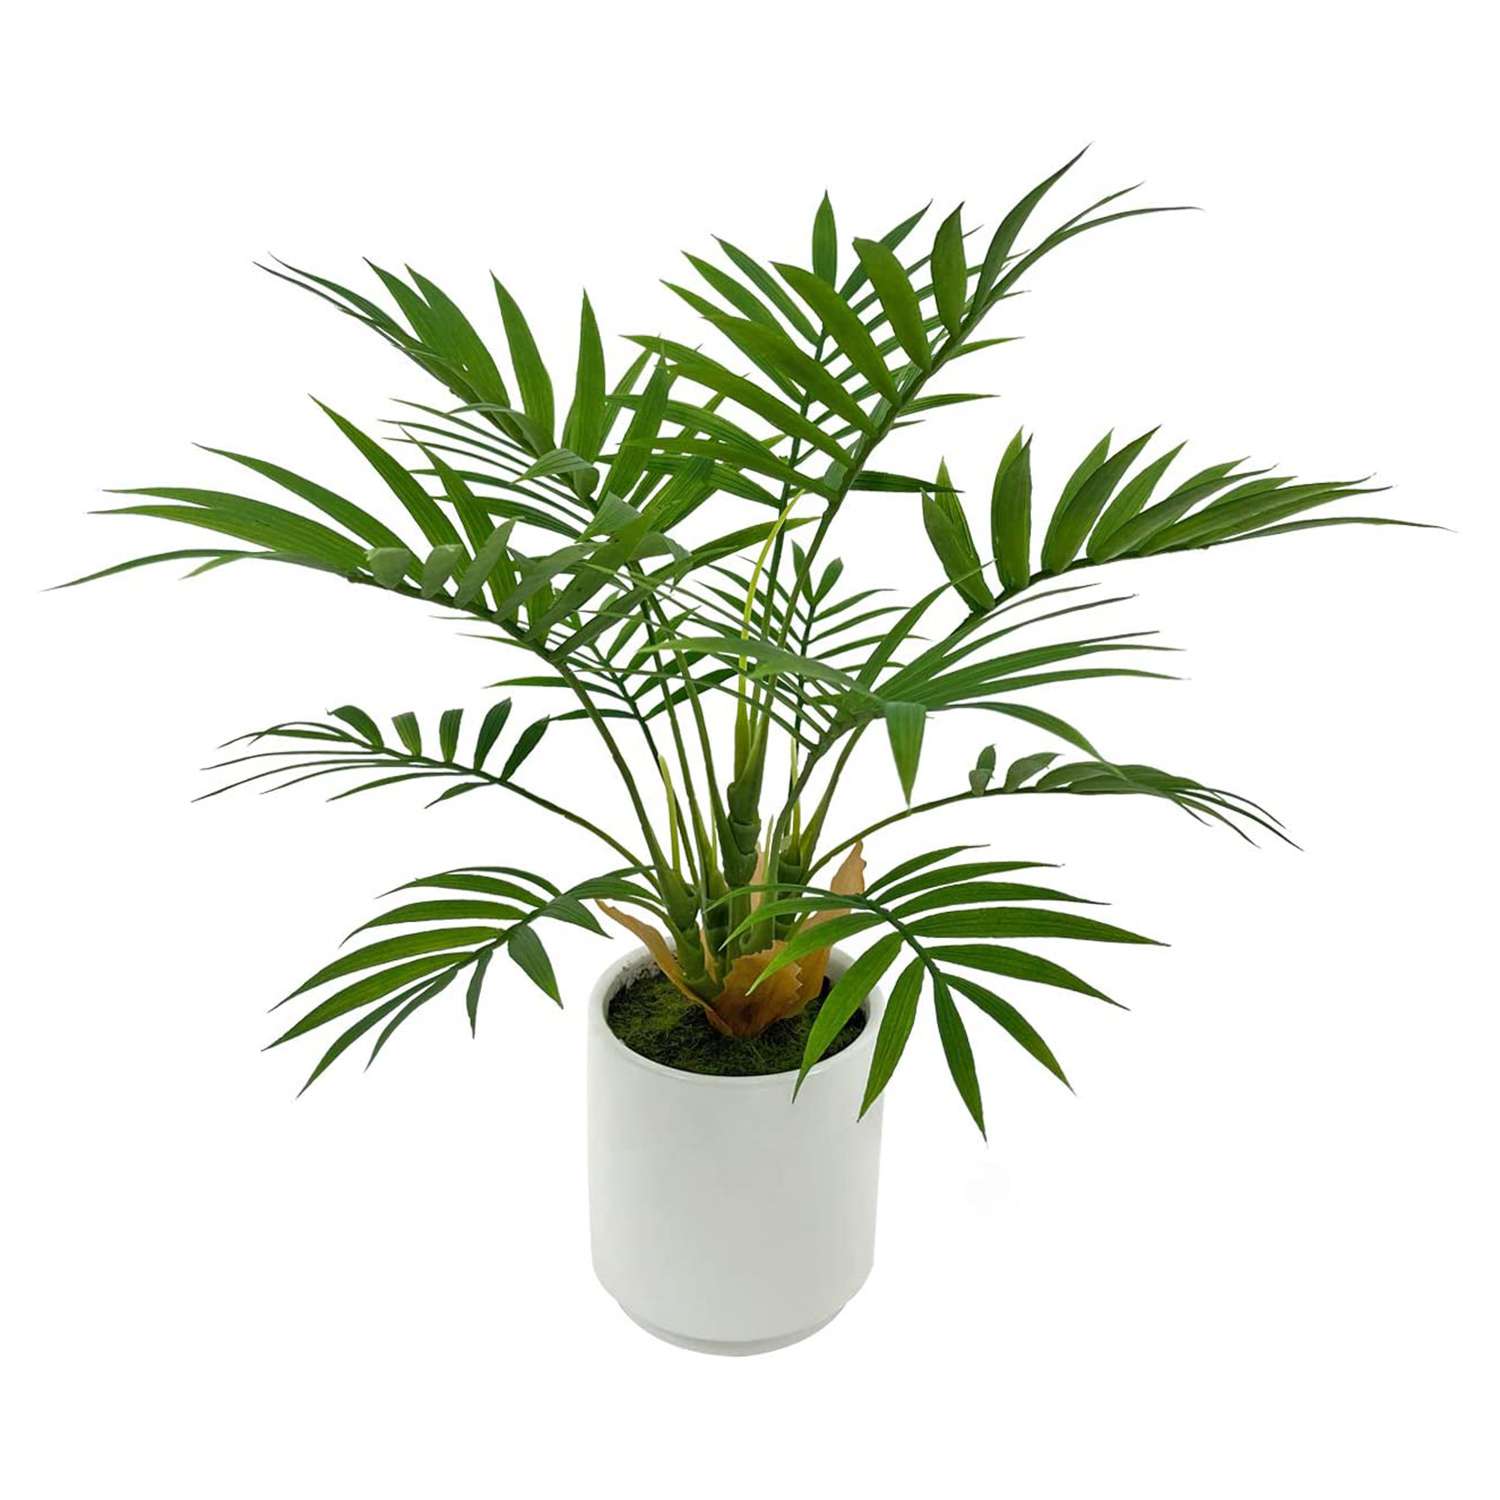 BESAMENATURE Artificial Palm Tree Plant